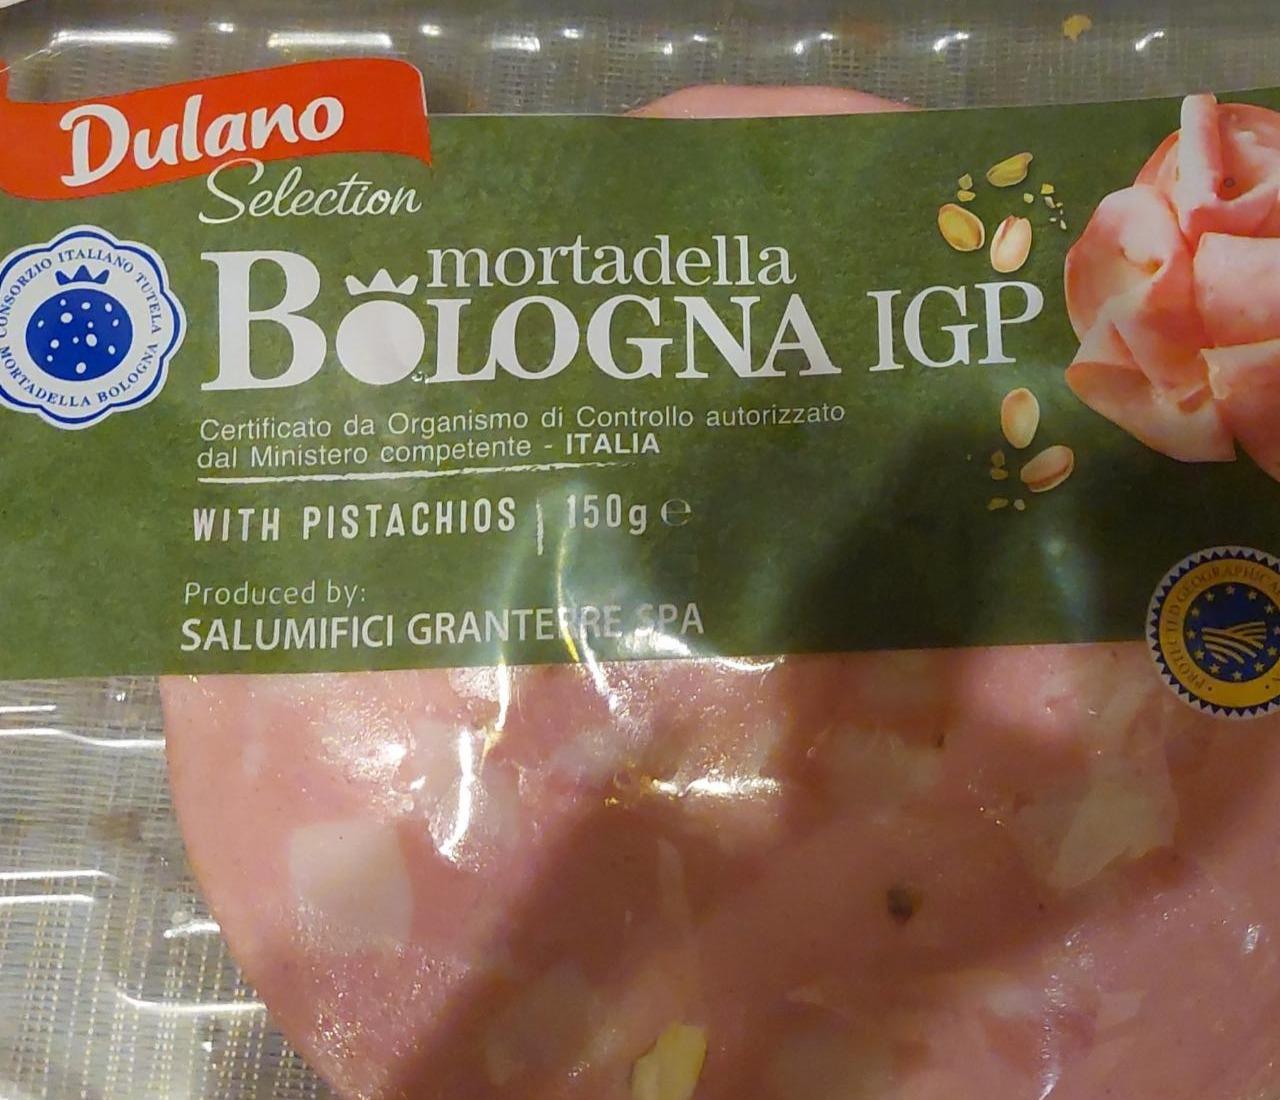 Képek - Mortadella Bologna IGP with pistachios Dulano